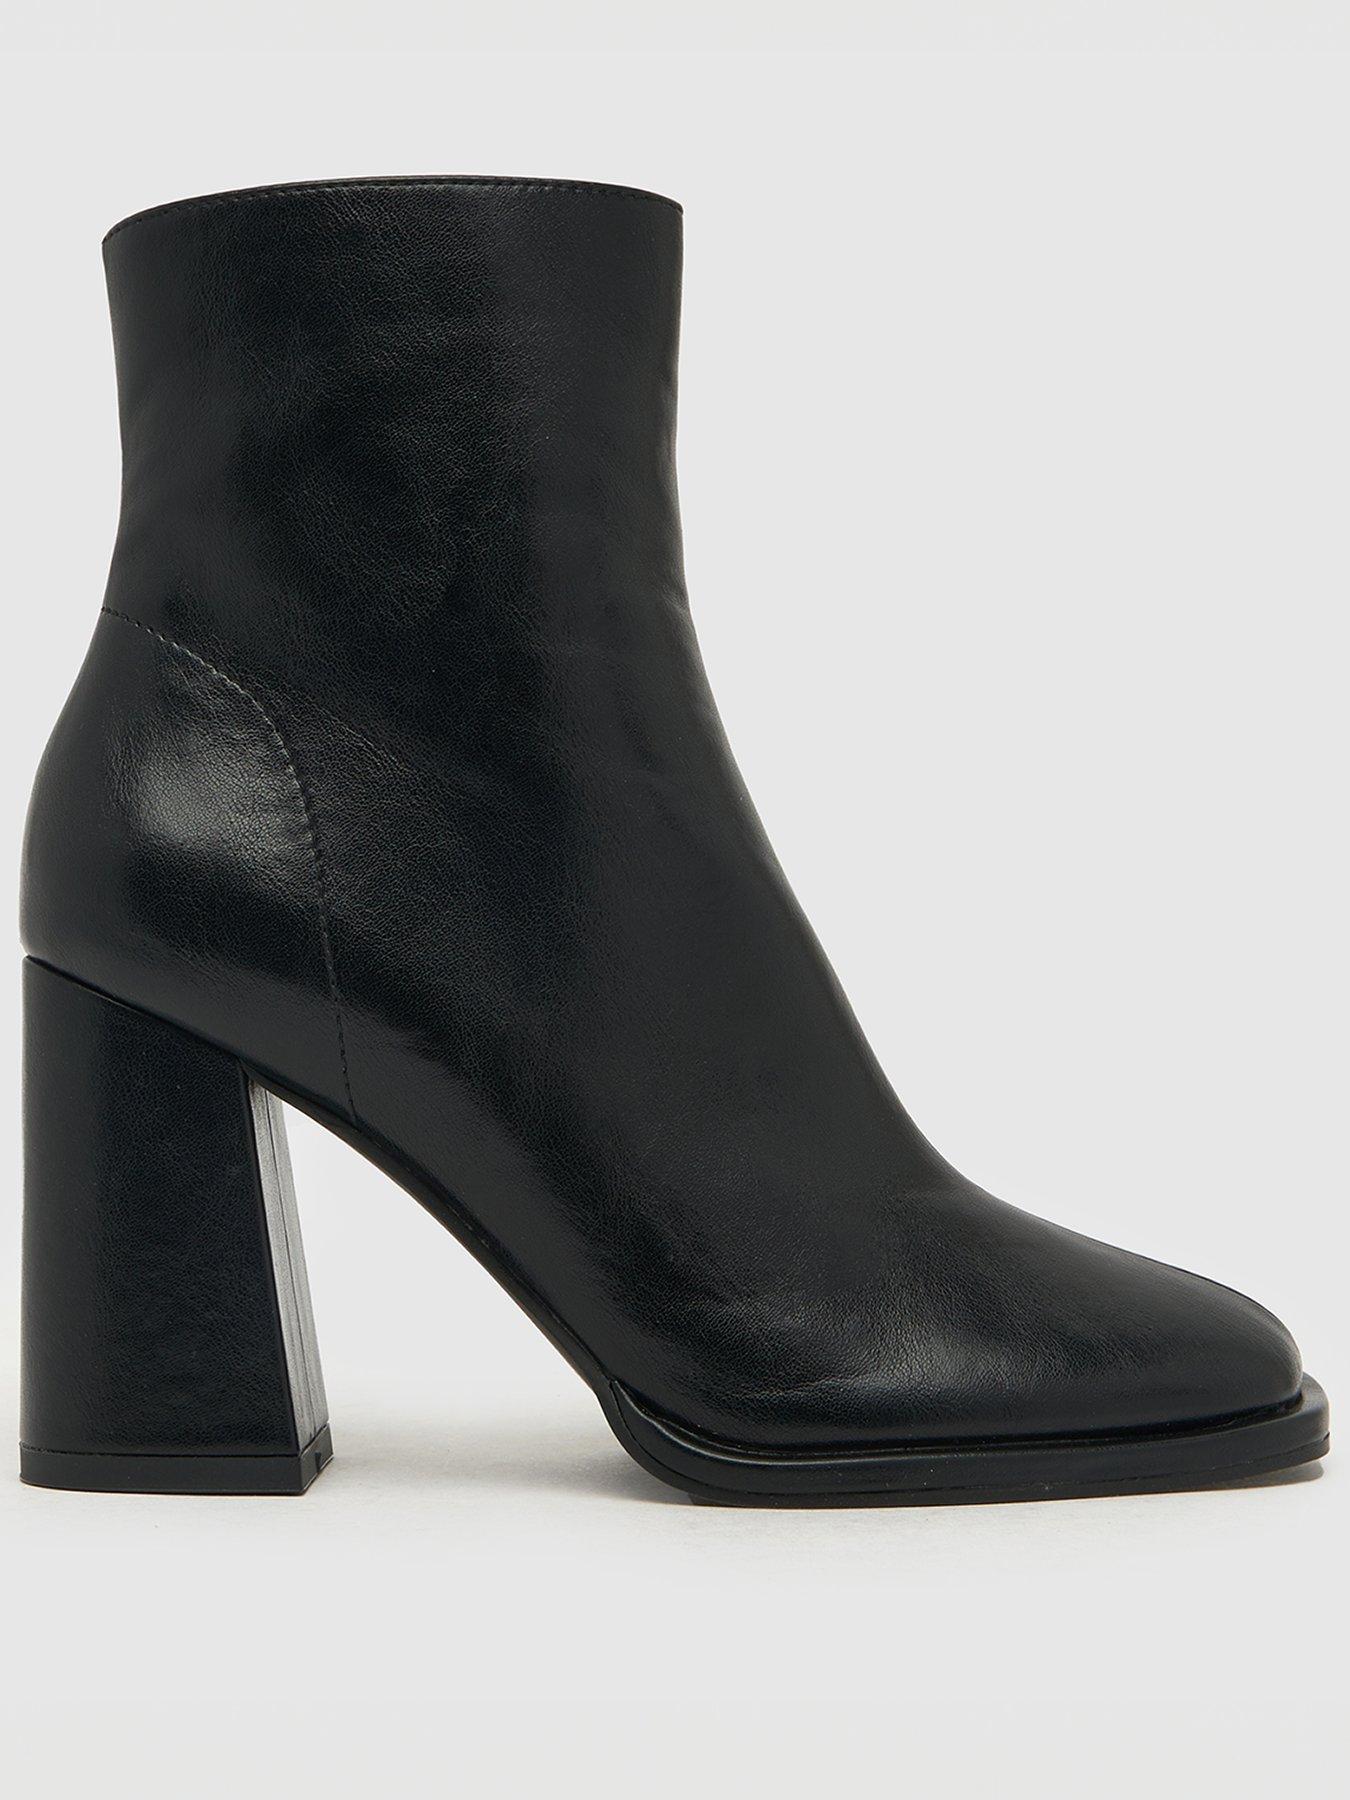 Calvin Klein Brady Black Pump Woman Shoes - Size 8.5 Medium - Brand New in  Box